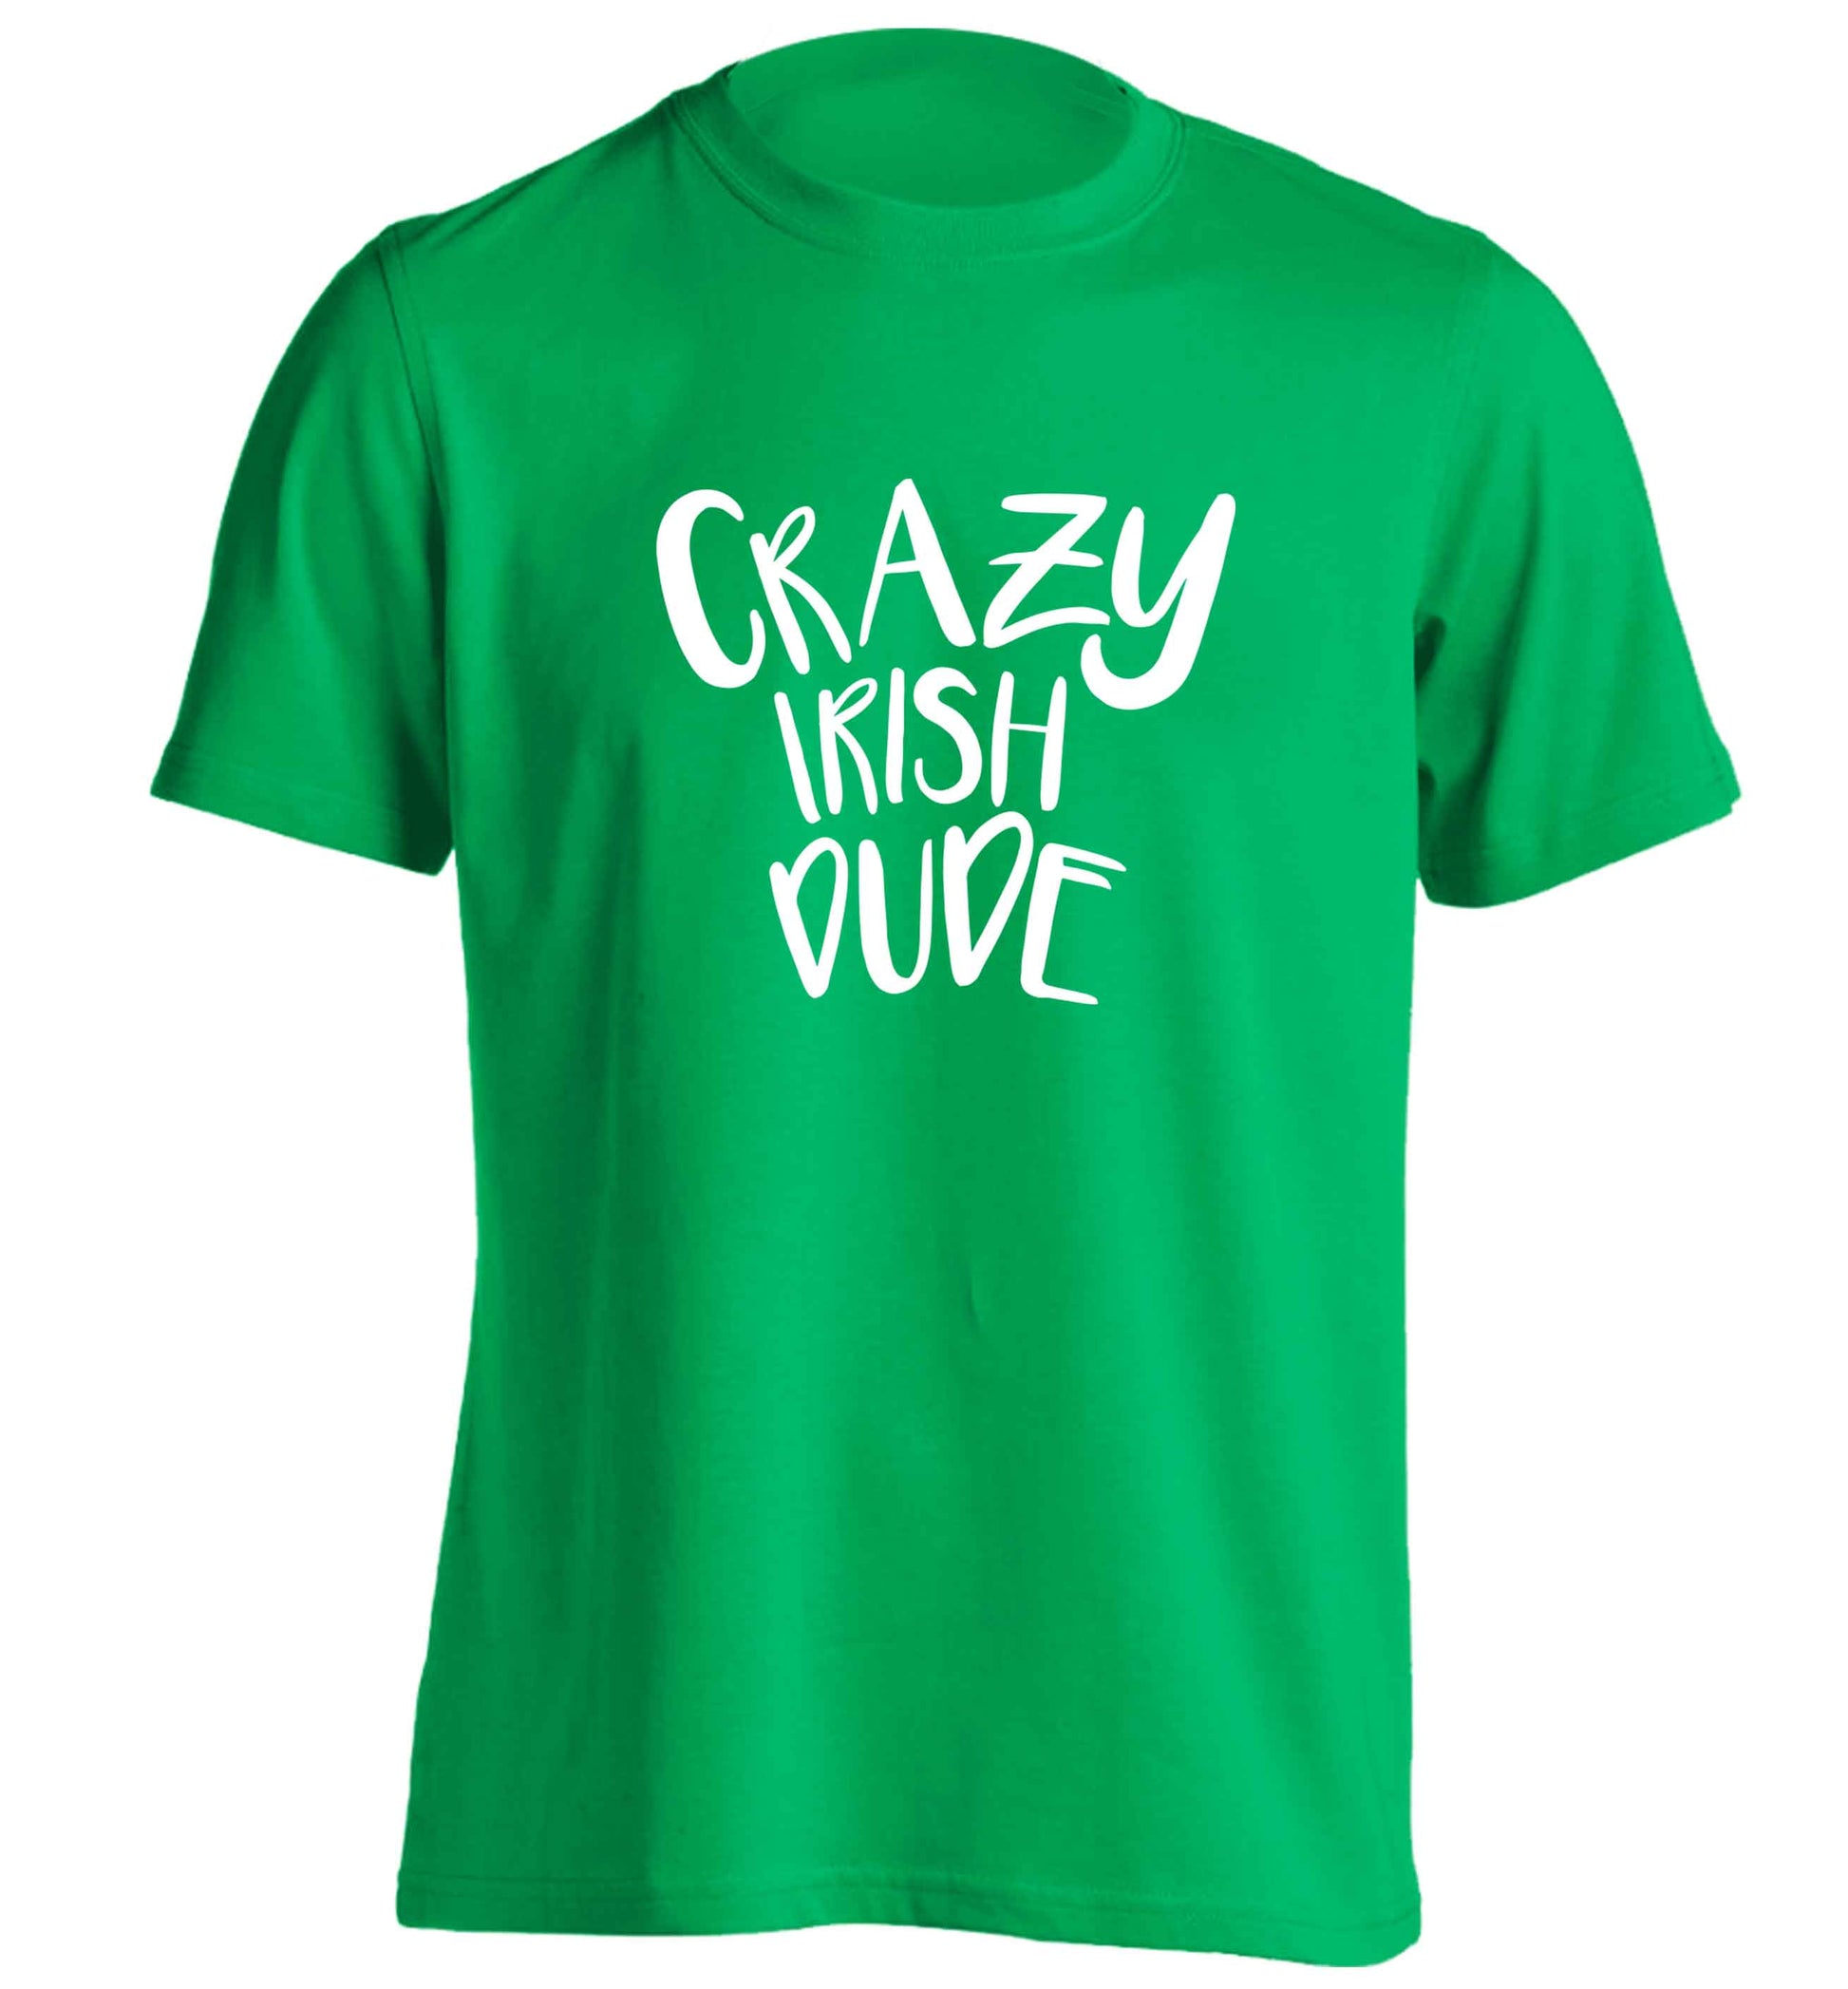 Crazy Irish dude adults unisex green Tshirt 2XL